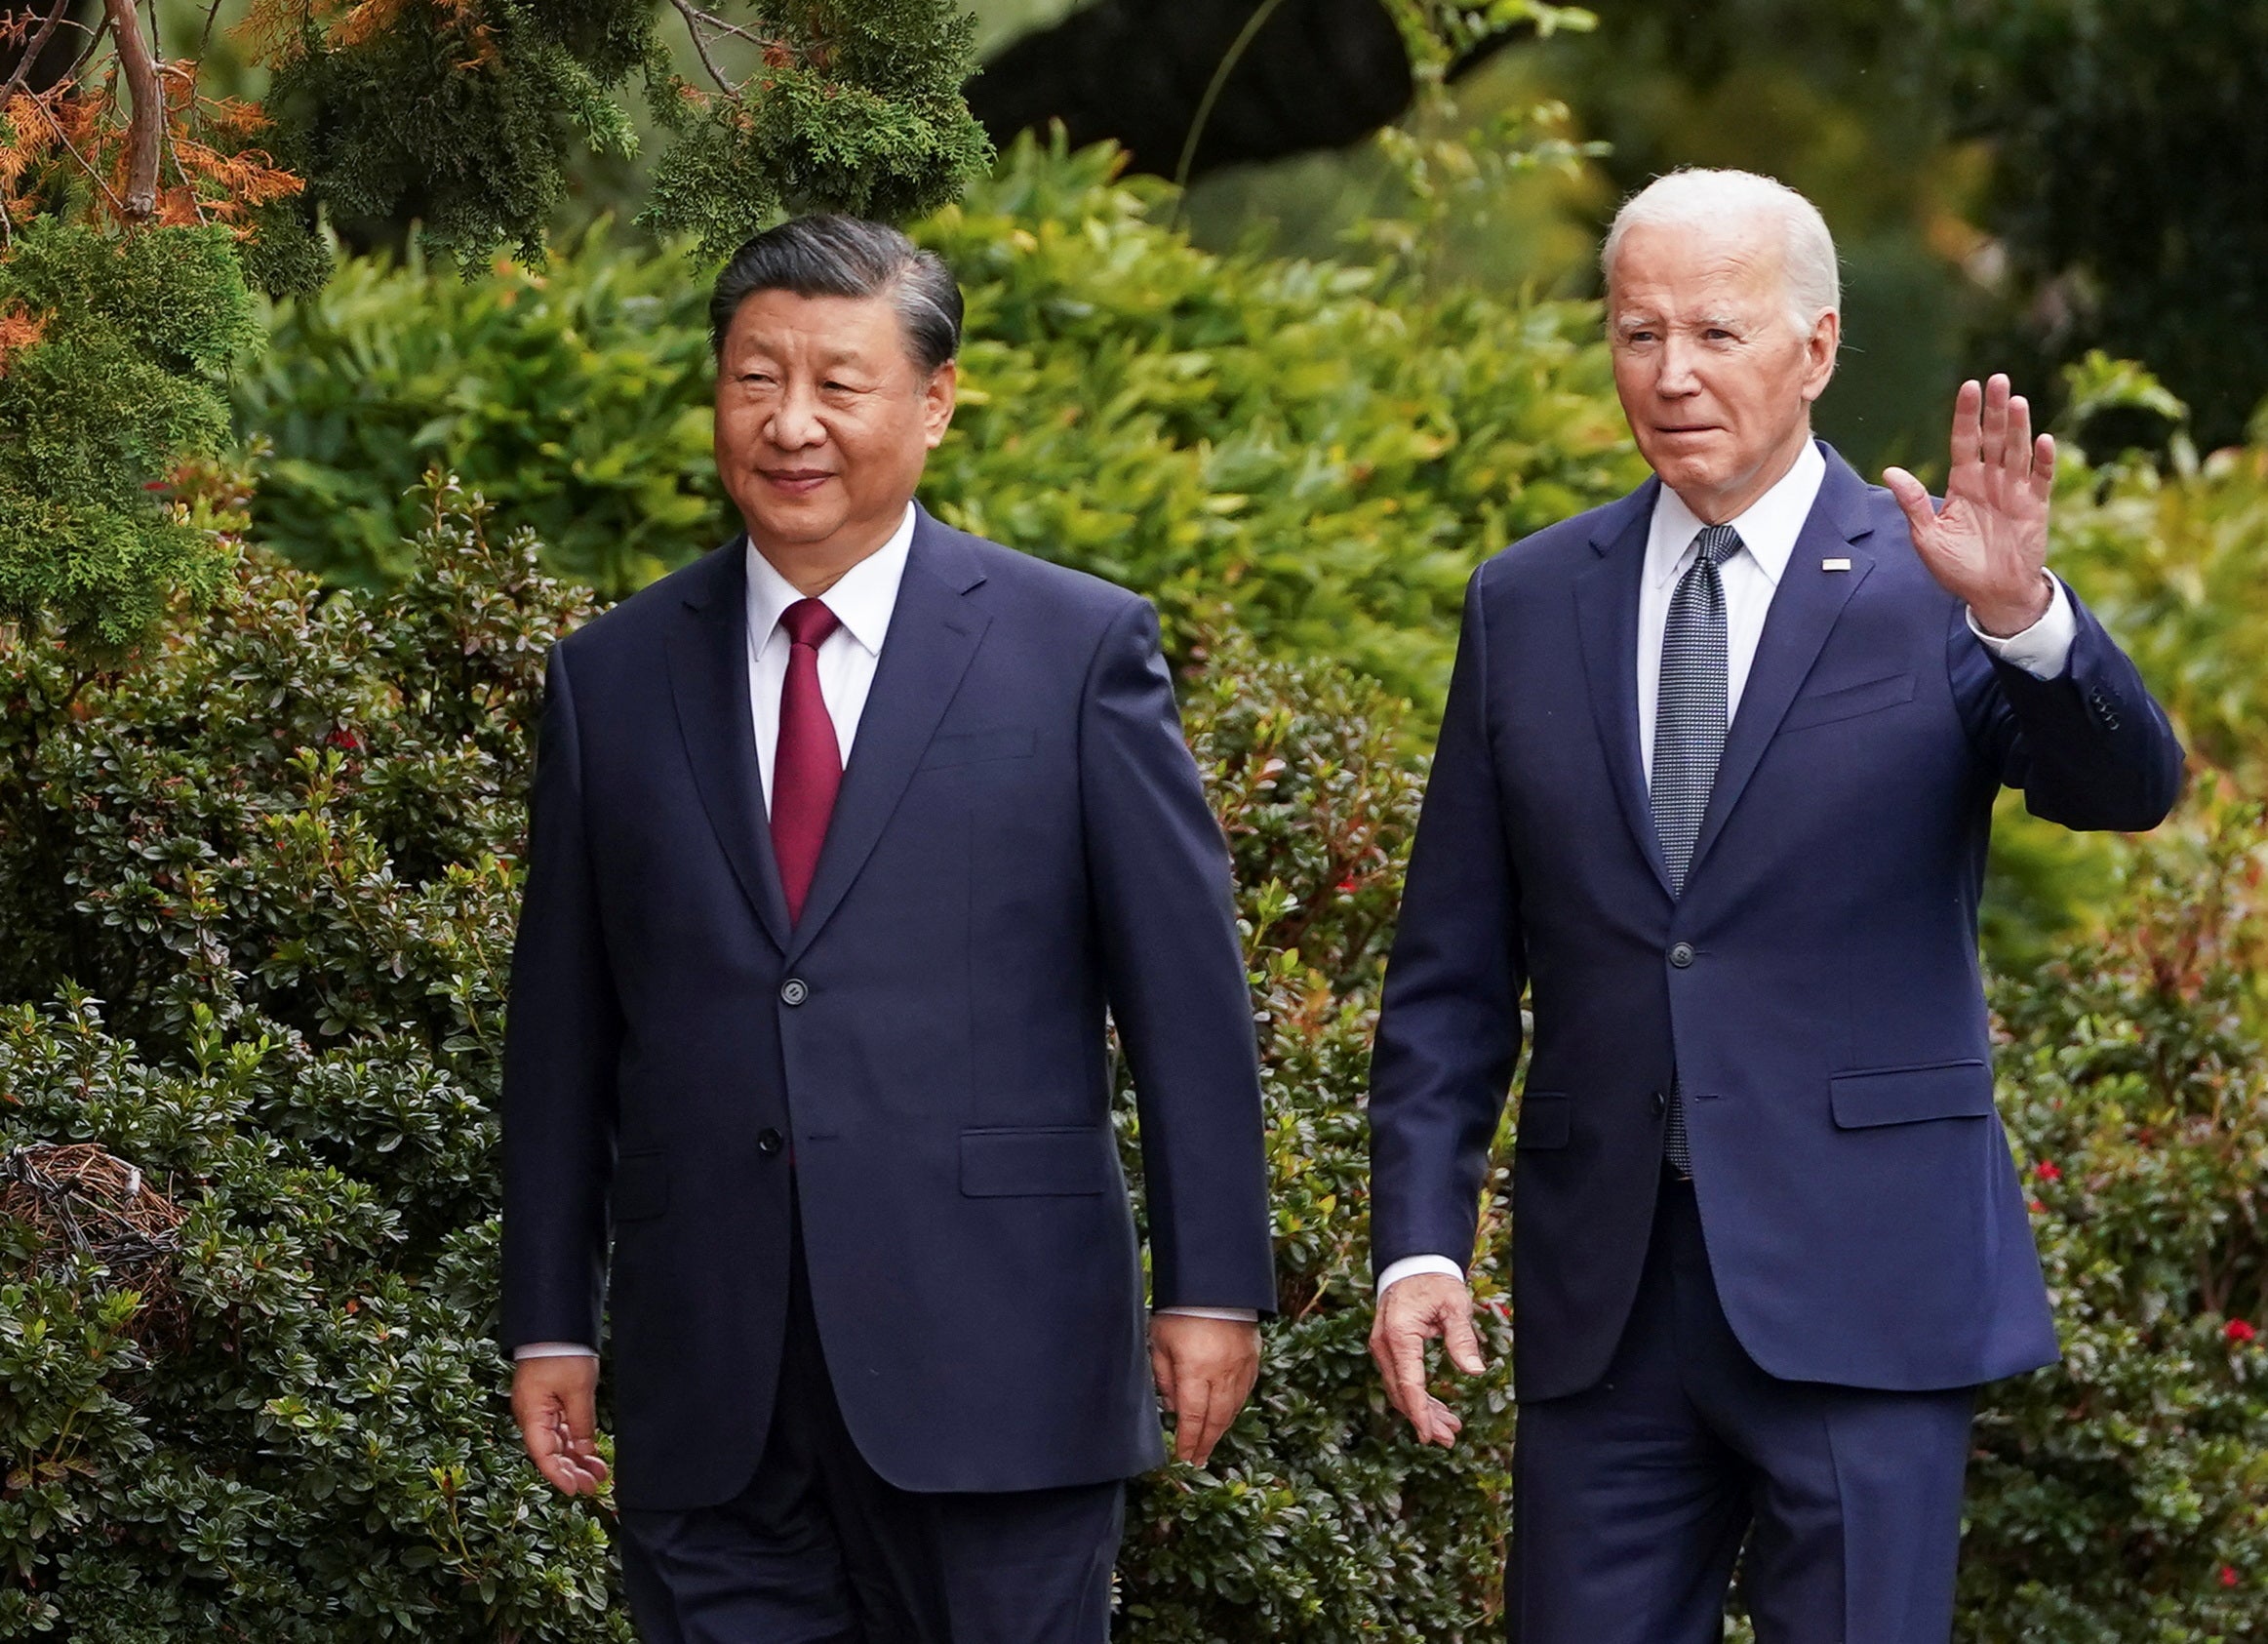 Xi and Biden take a walk on the Filoli estate in Woodside, California